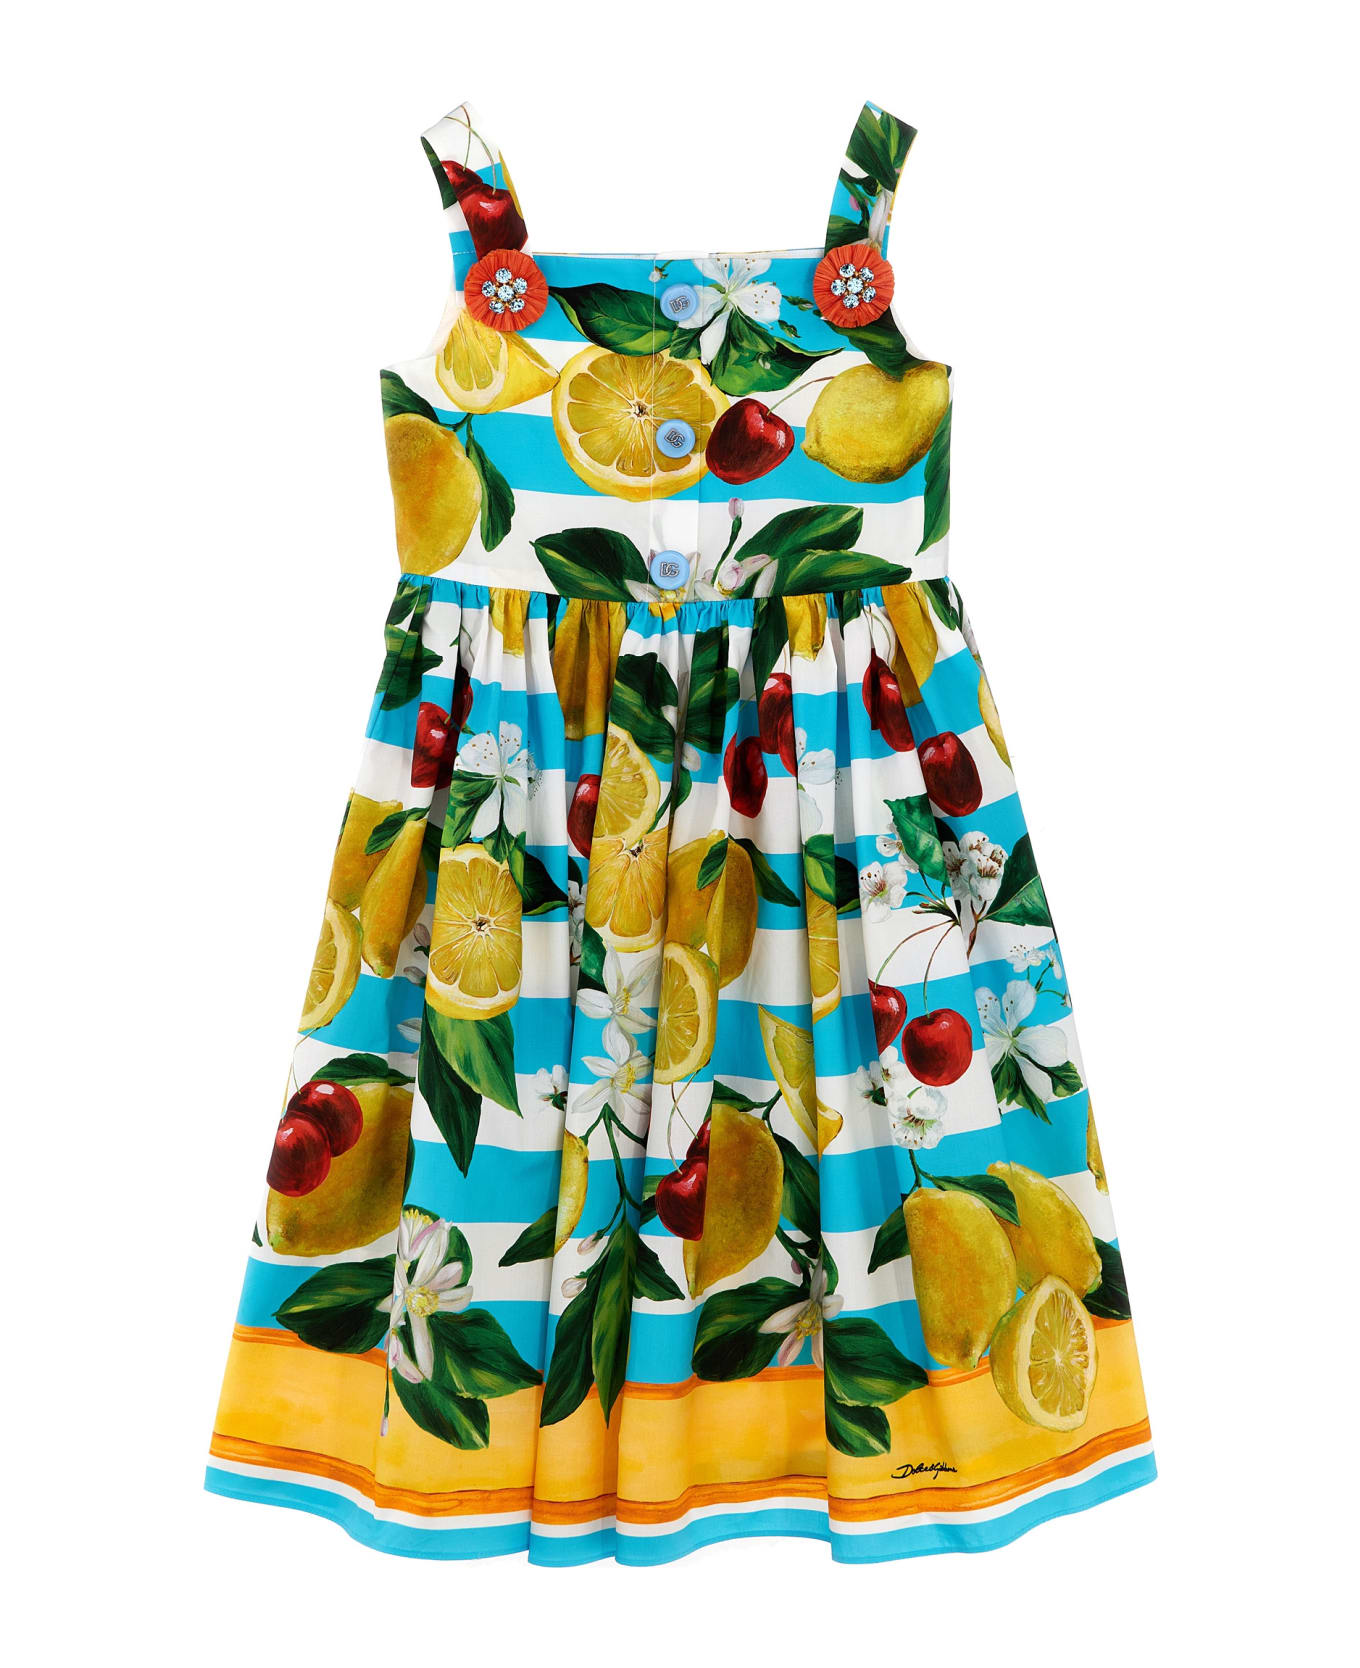 Dolce polo & Gabbana Fruit Print Dress - Multicolor